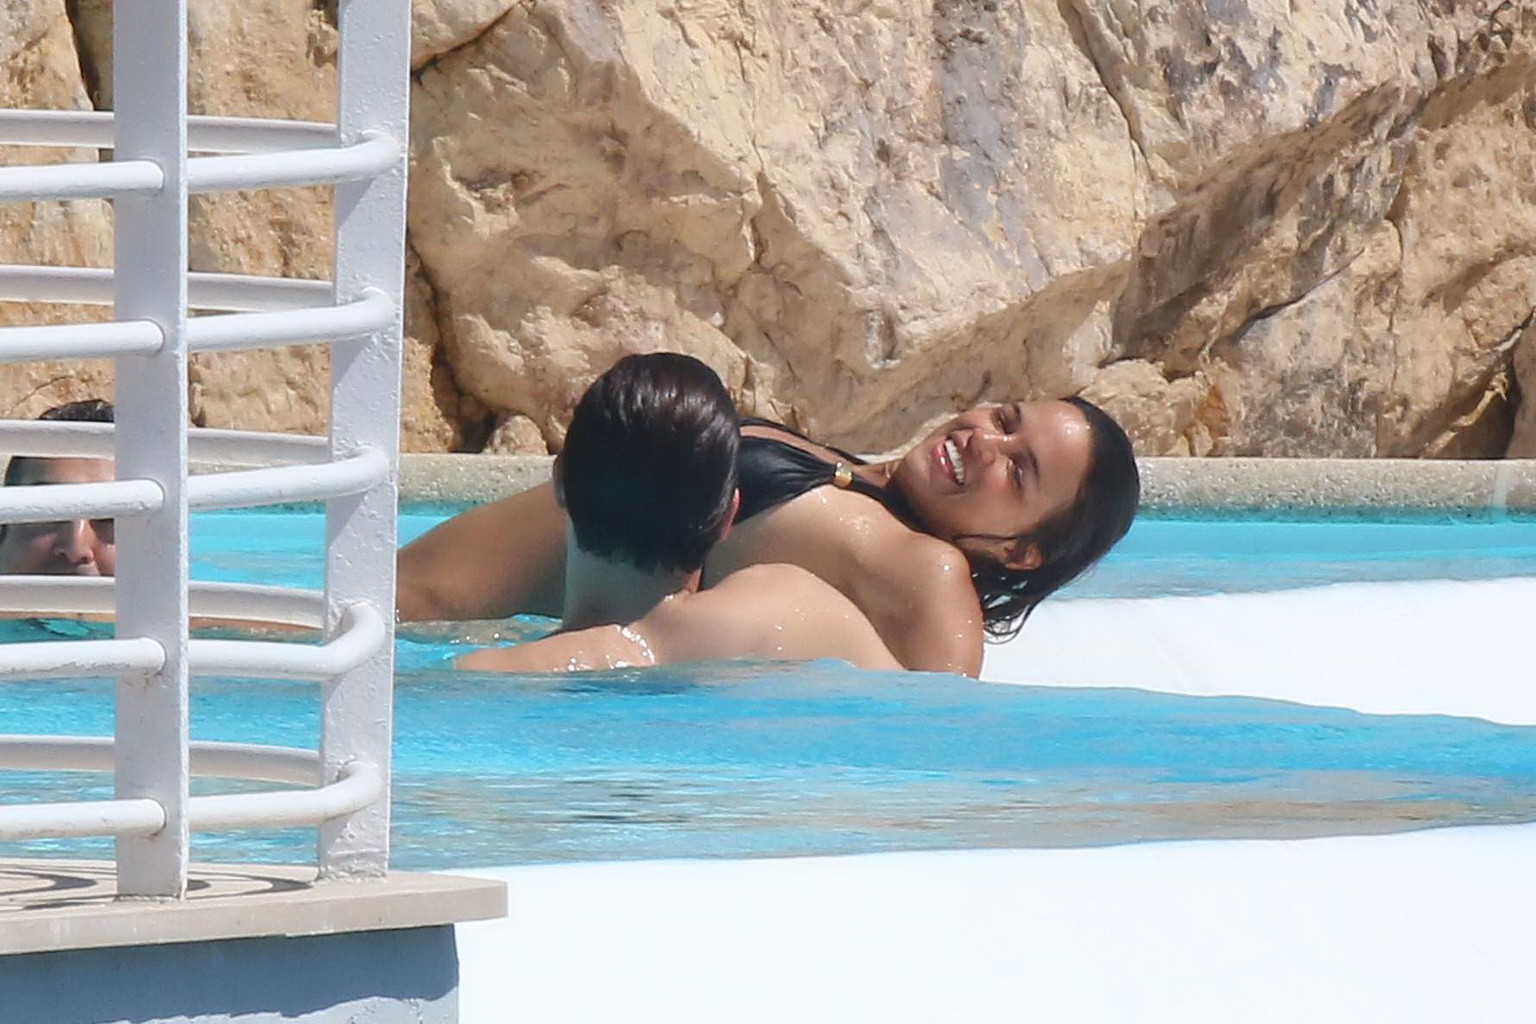 Michelle Rodriguez wearing skimpy black bikini poolside at Cap Eden Roc Hotel in #75195641